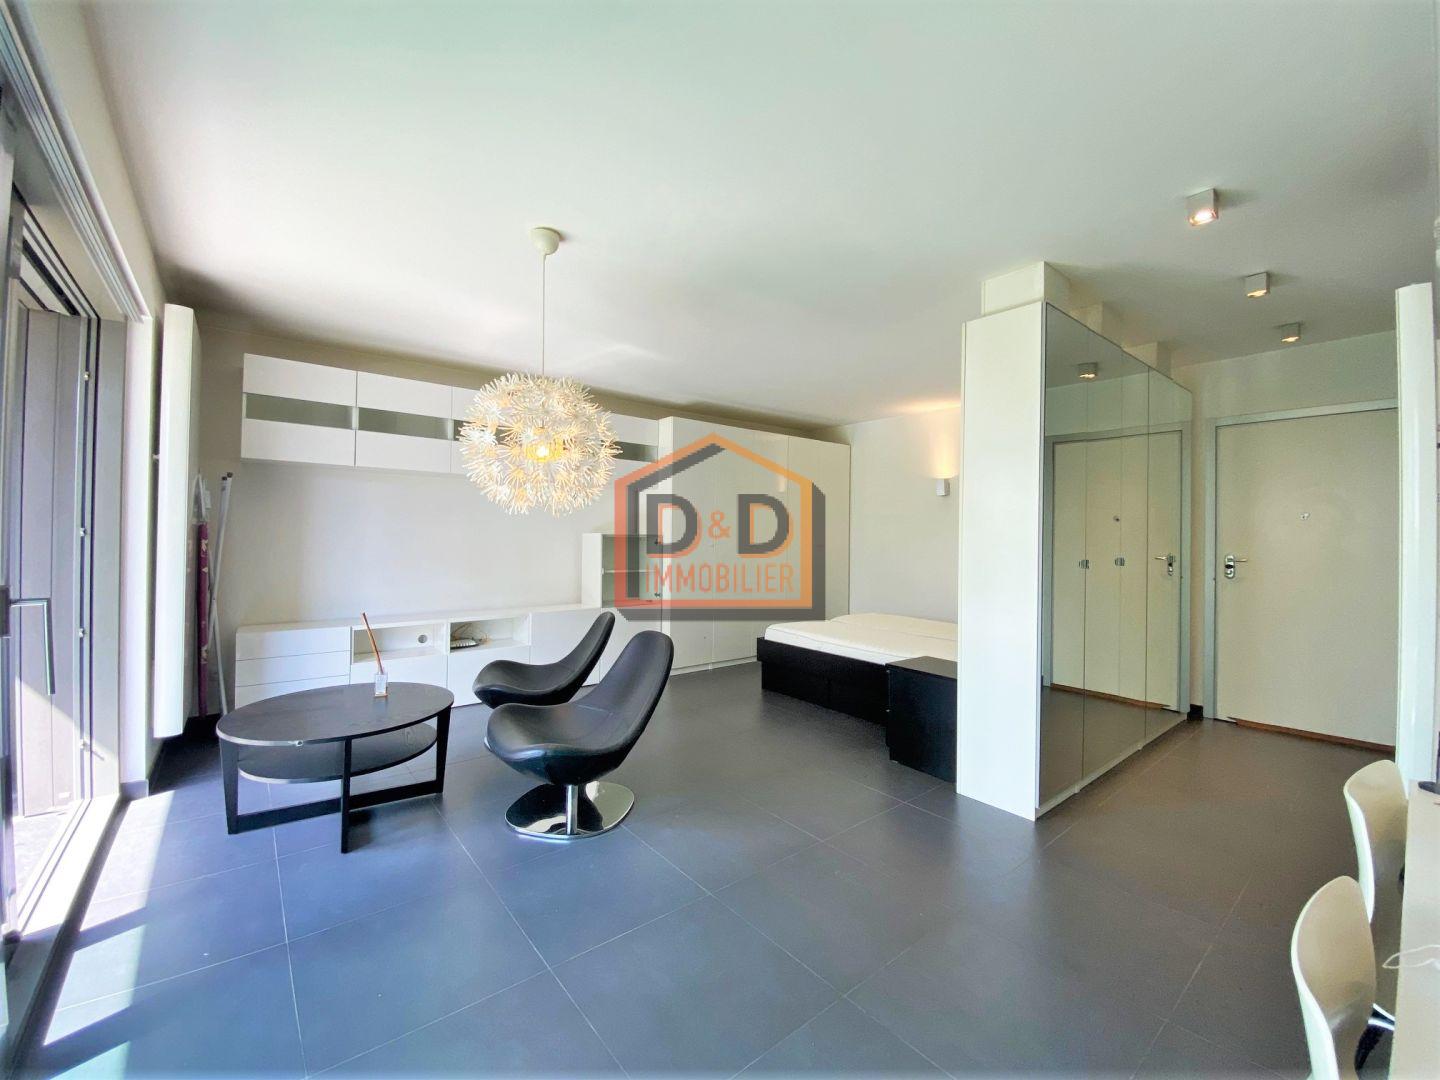 Appartement à Luxembourg-Merl, 40 m², 1 salle de bain, 1 350 €/mois